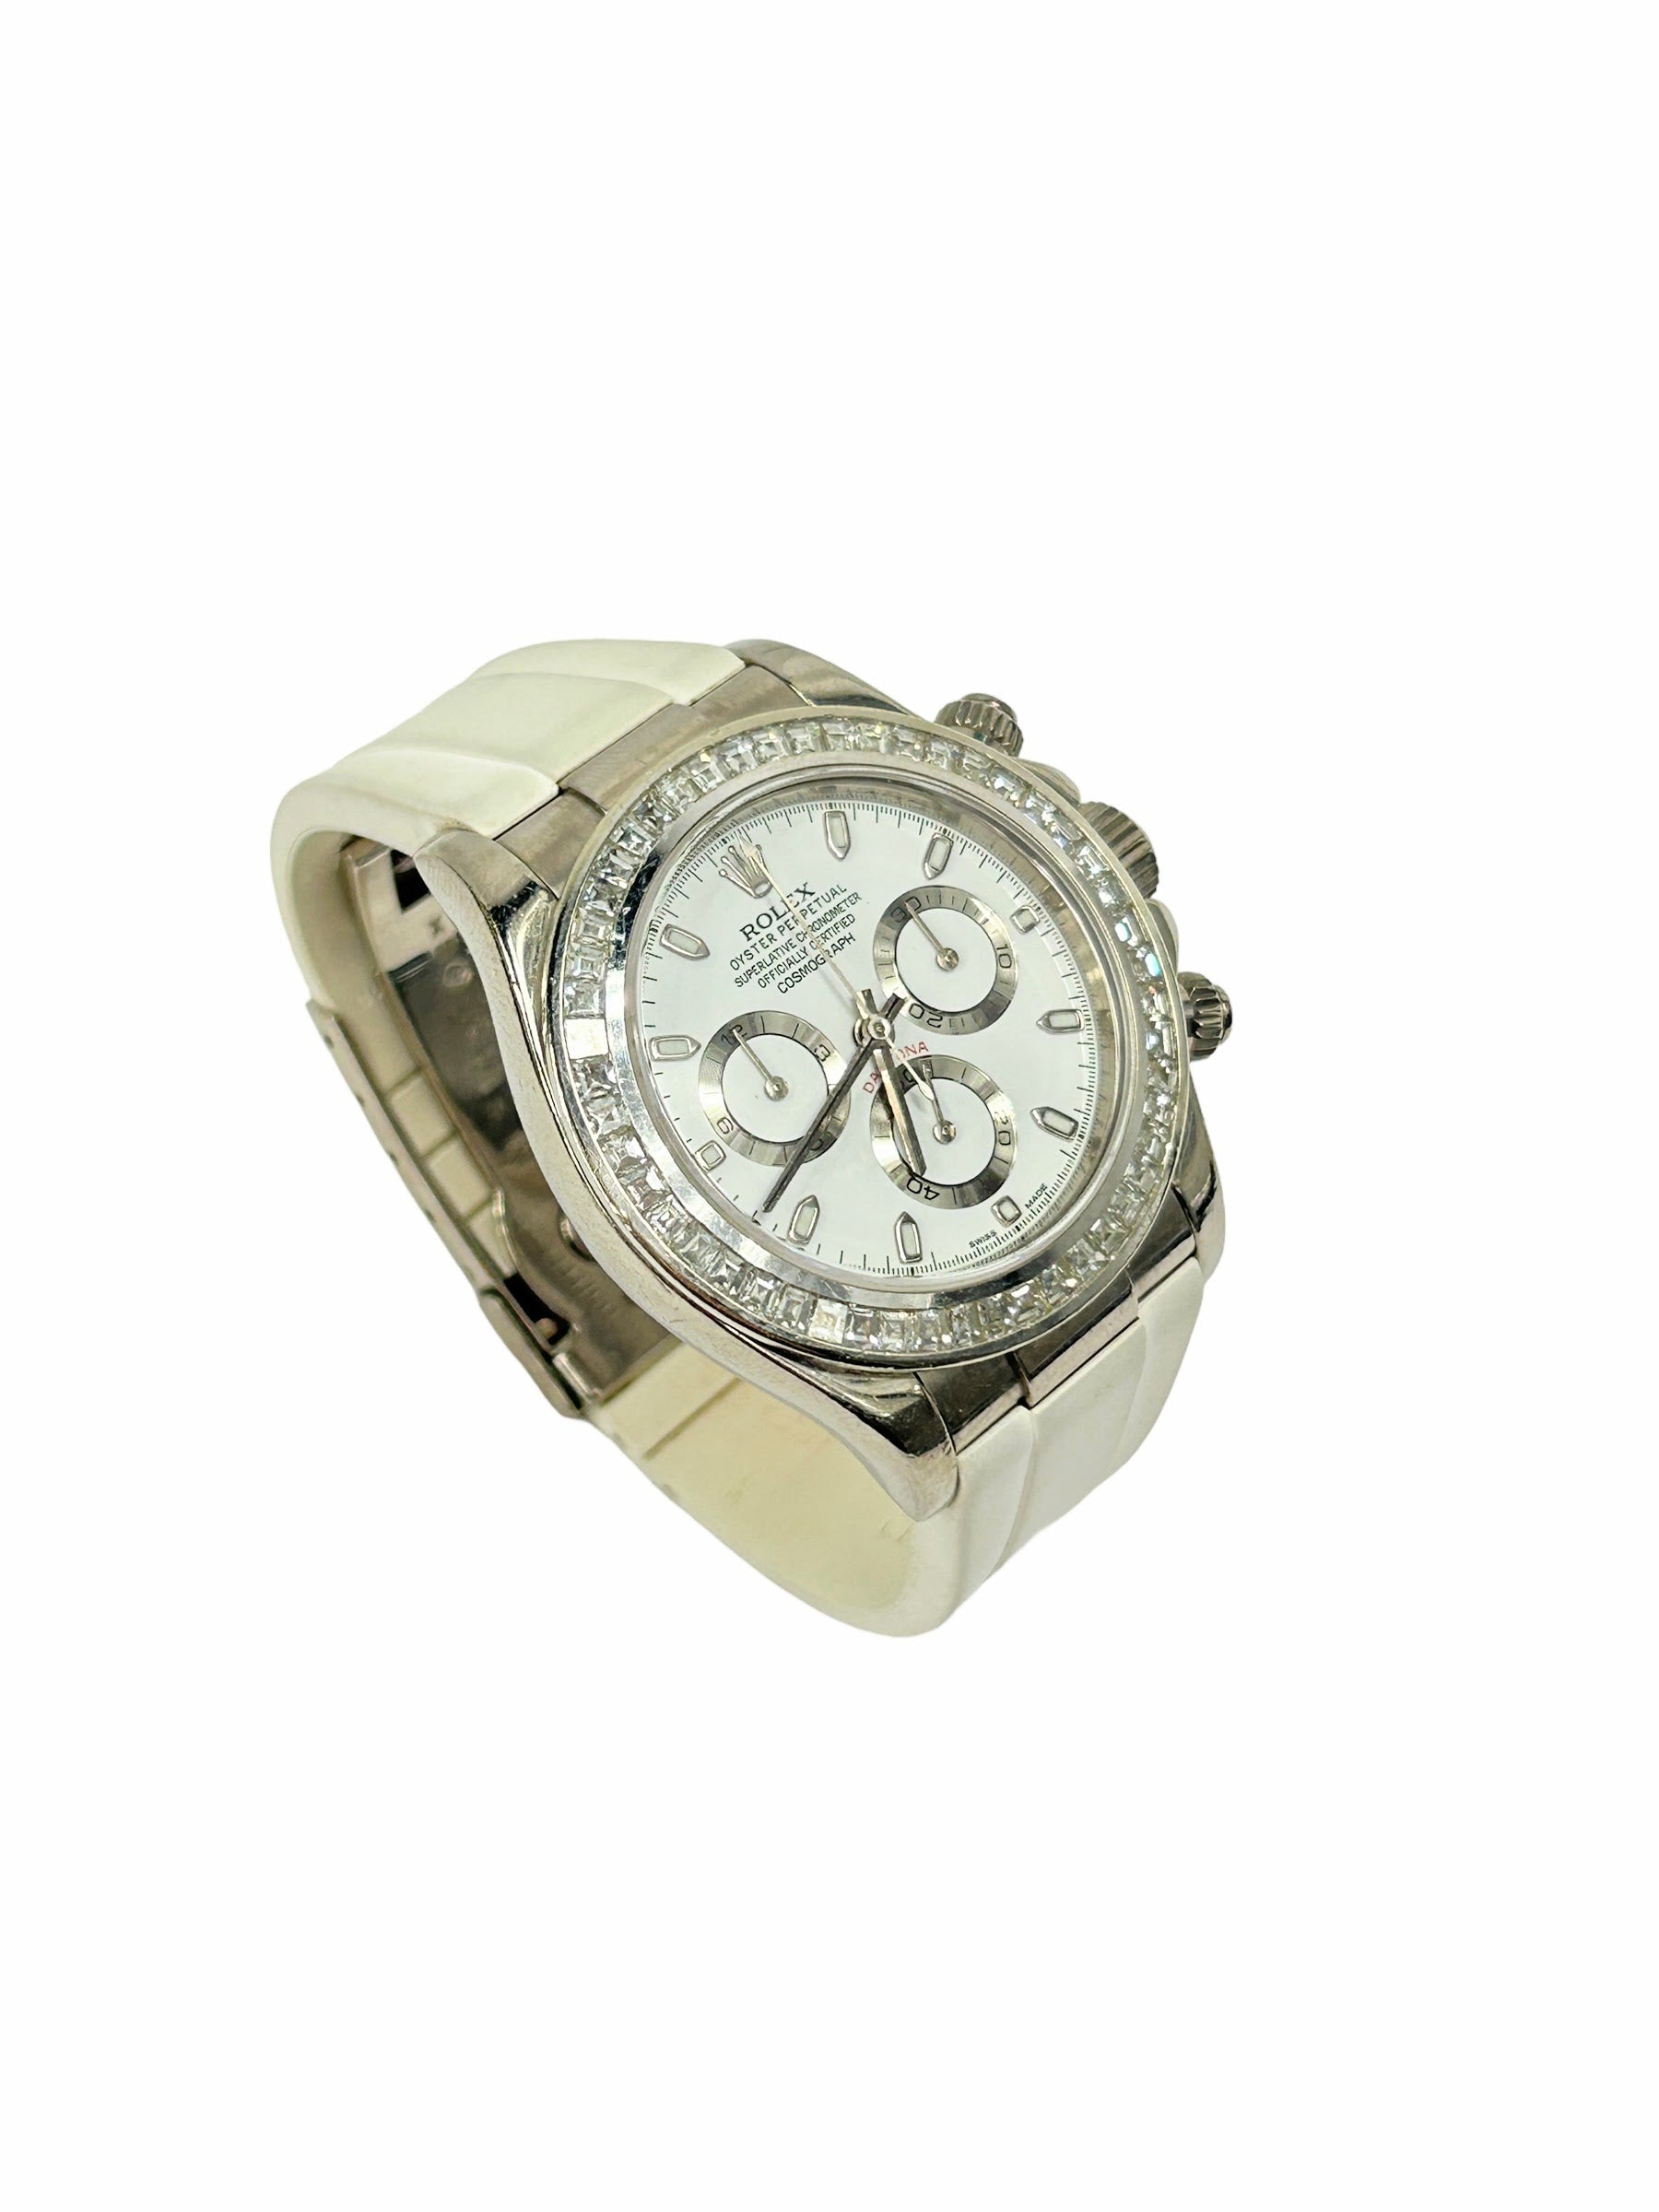 Daytona 18K White Gold Emerald Cut Diamond Cosmograph Watch w/ Oysterflex White Rubber Band